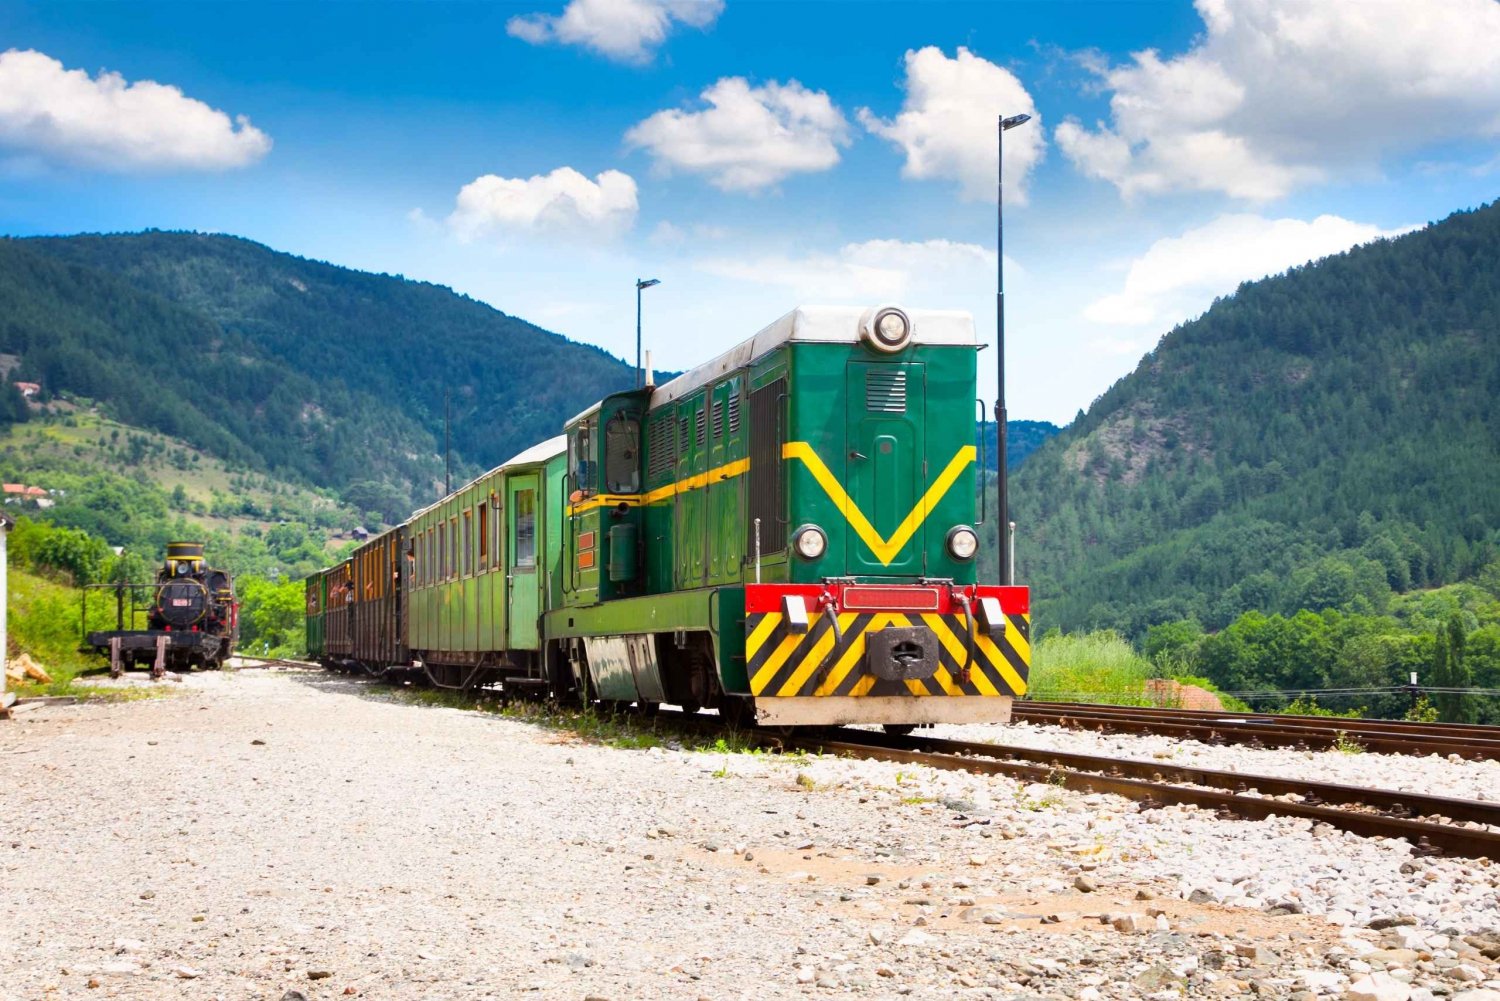 Sargan Eight railroad ride & Tara mountain